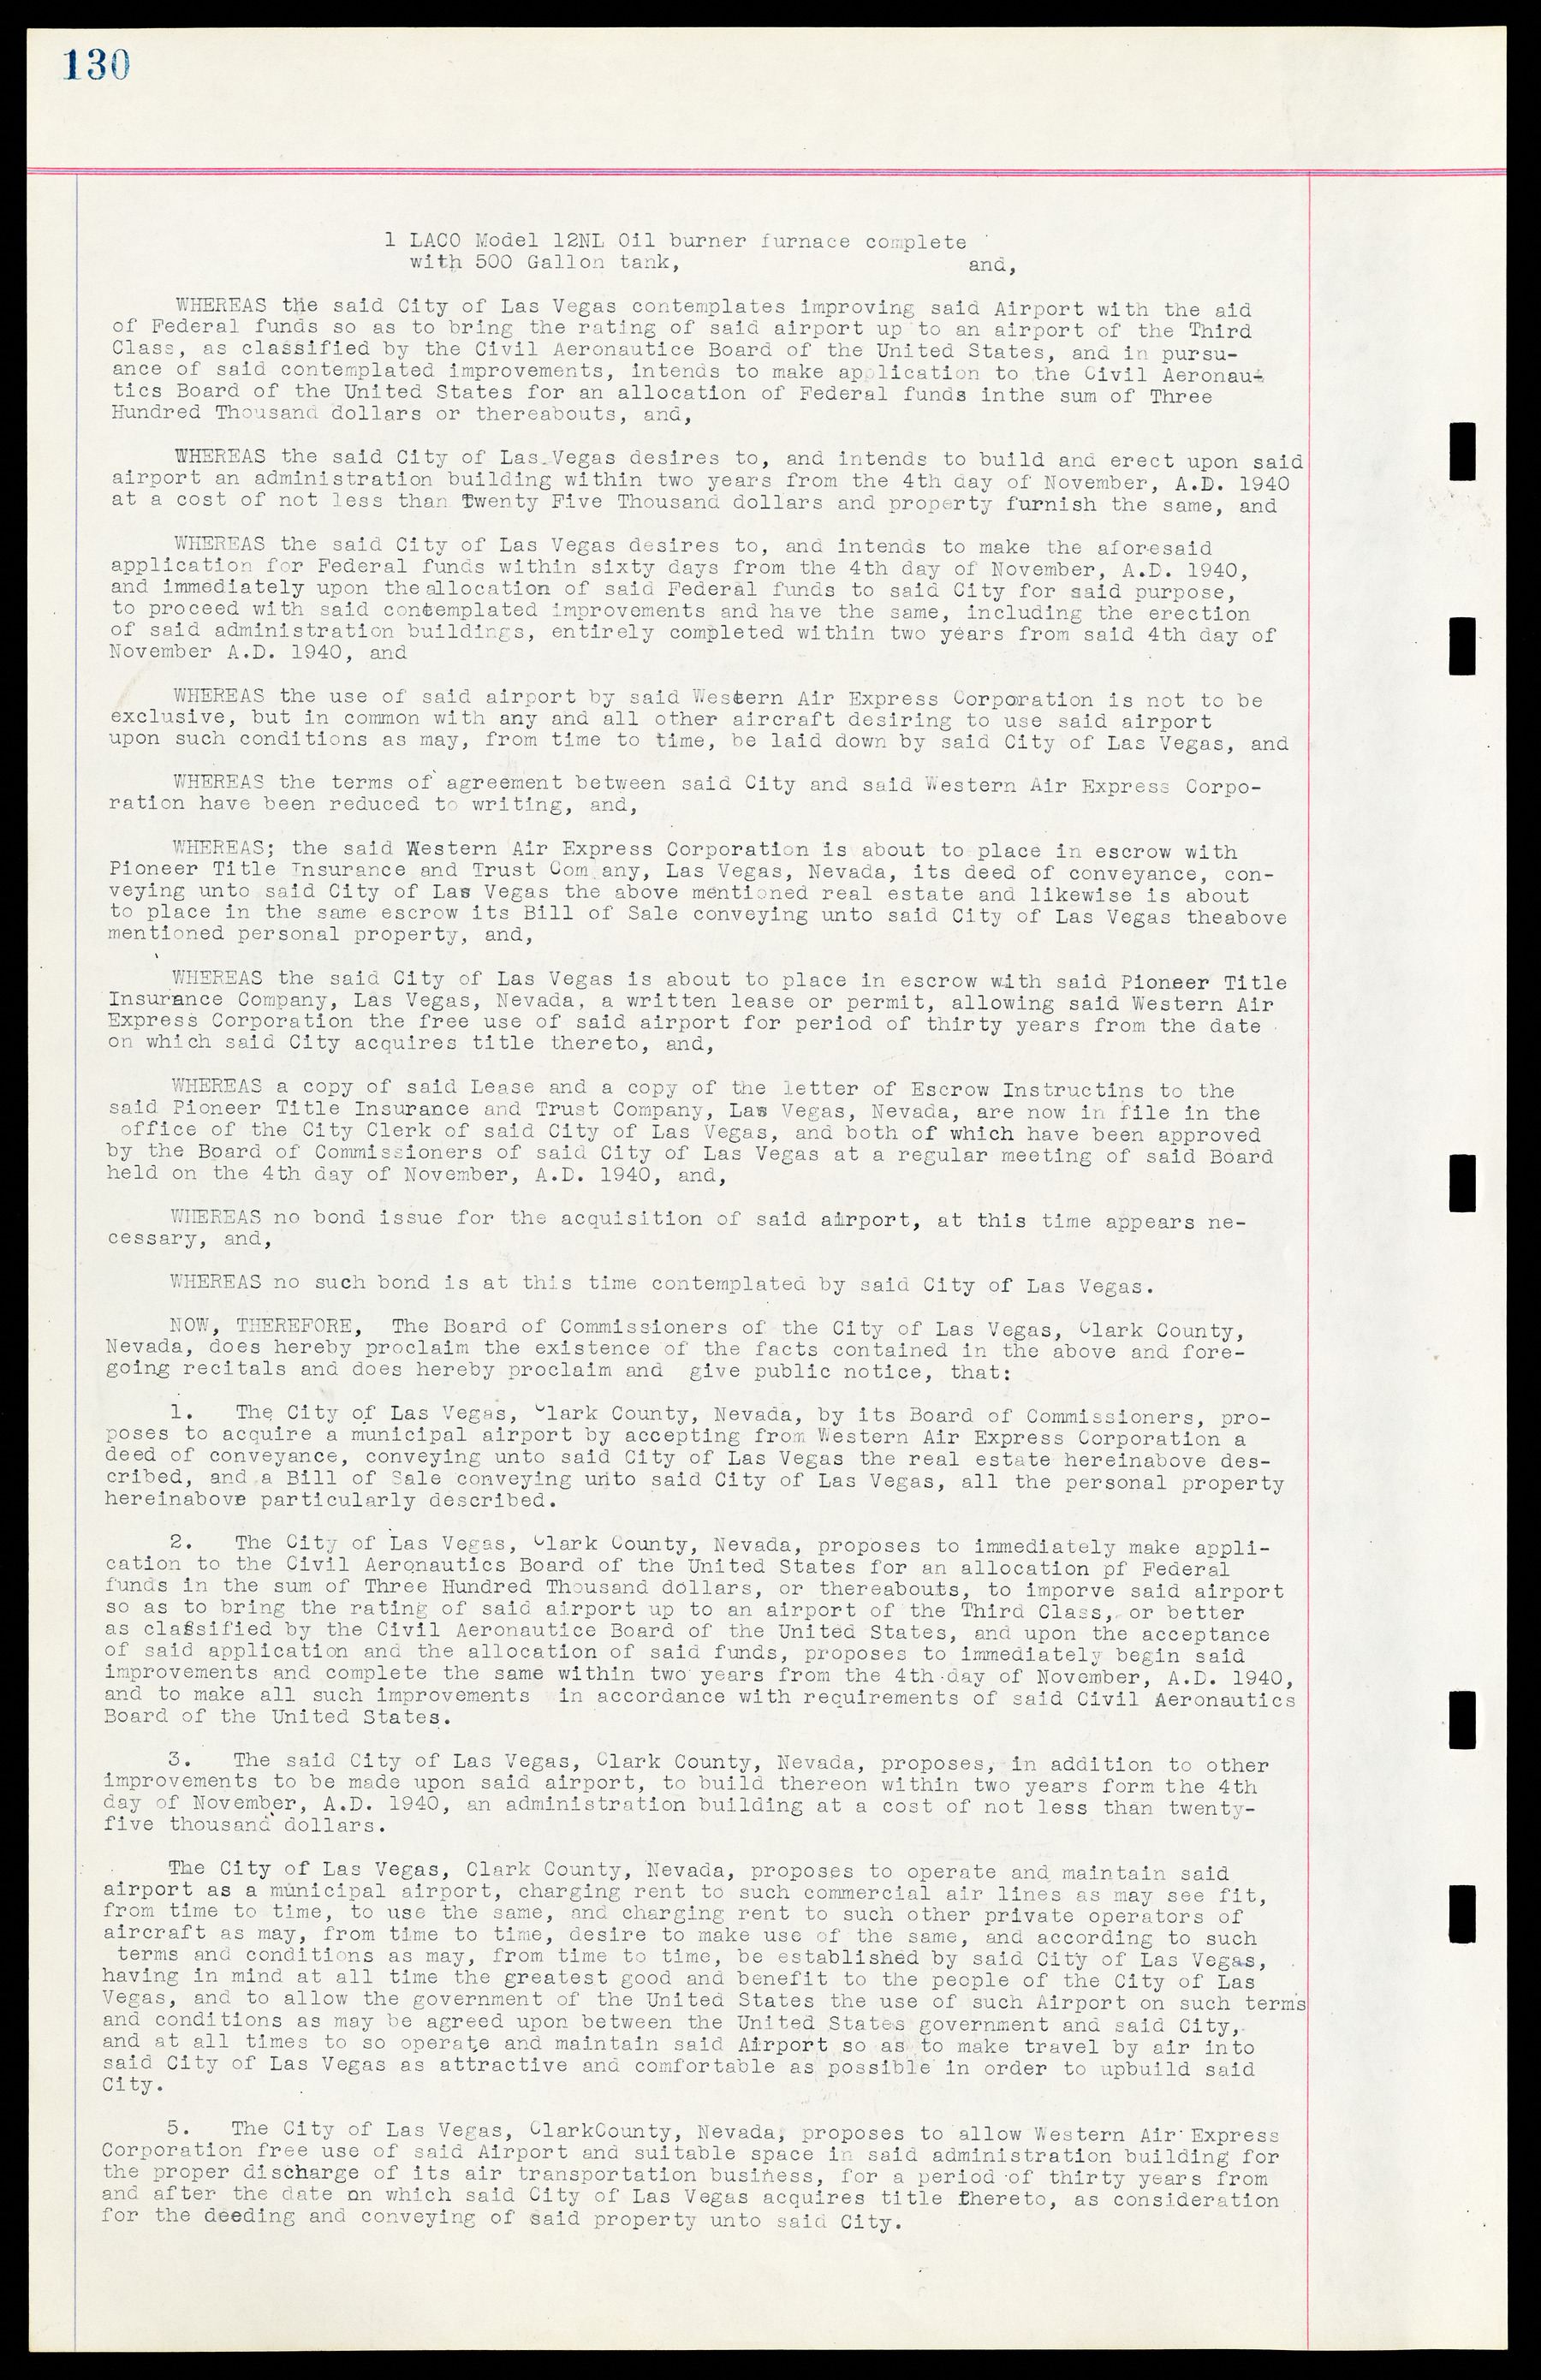 Las Vegas City Ordinances, March 31, 1933 to October 25, 1950, lvc000014-150